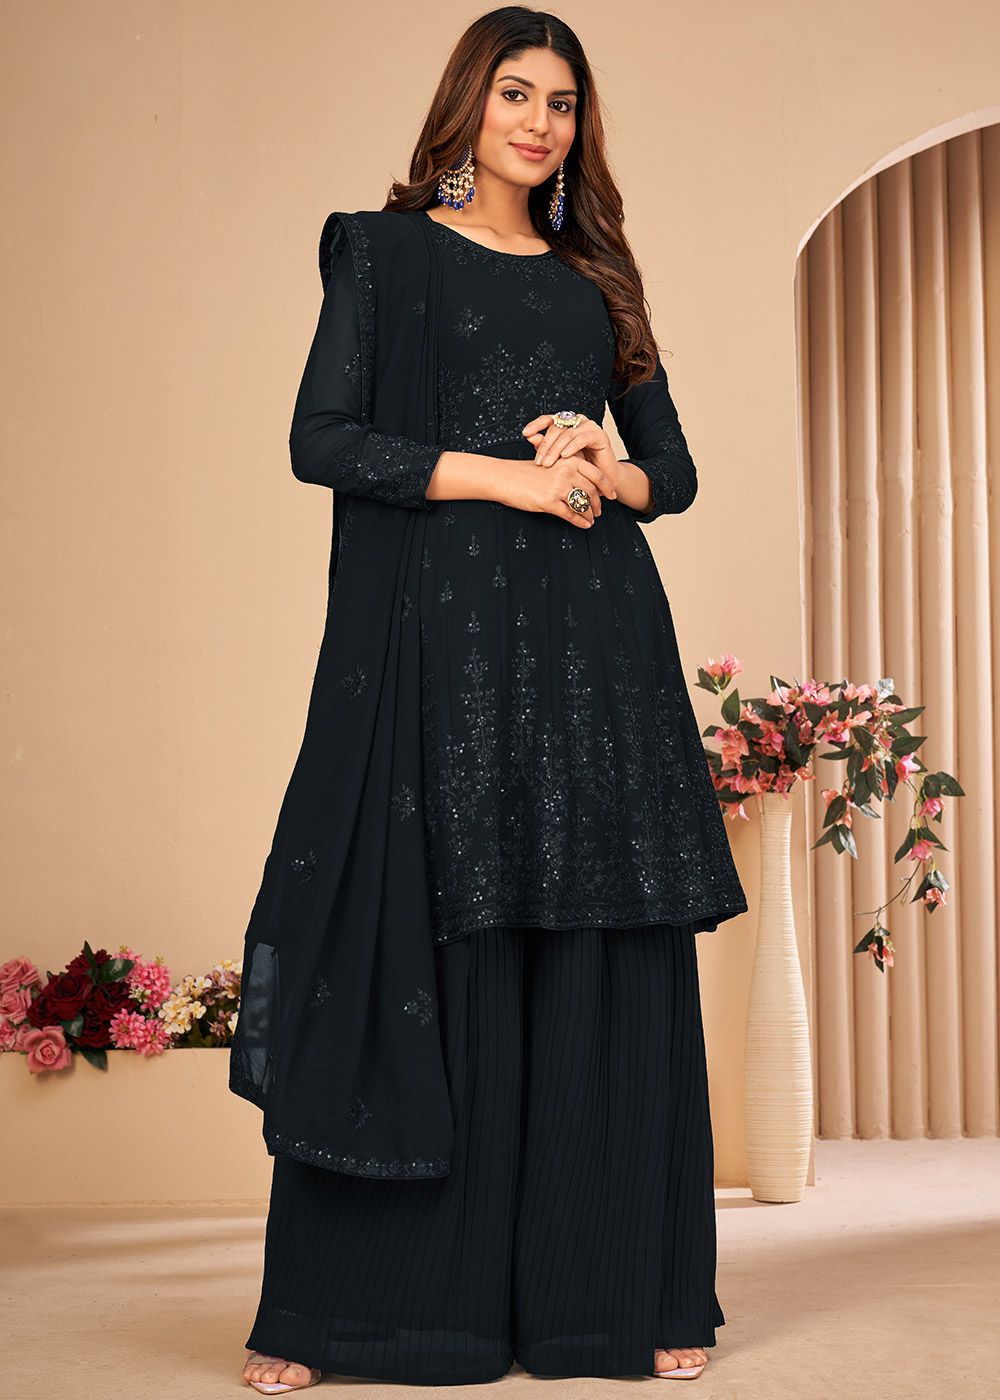 Mouni Roy Bollywood Designer Black Georgette Sharara Suit at Rs 1599/piece  | Sharara Set in Bengaluru | ID: 23464691833